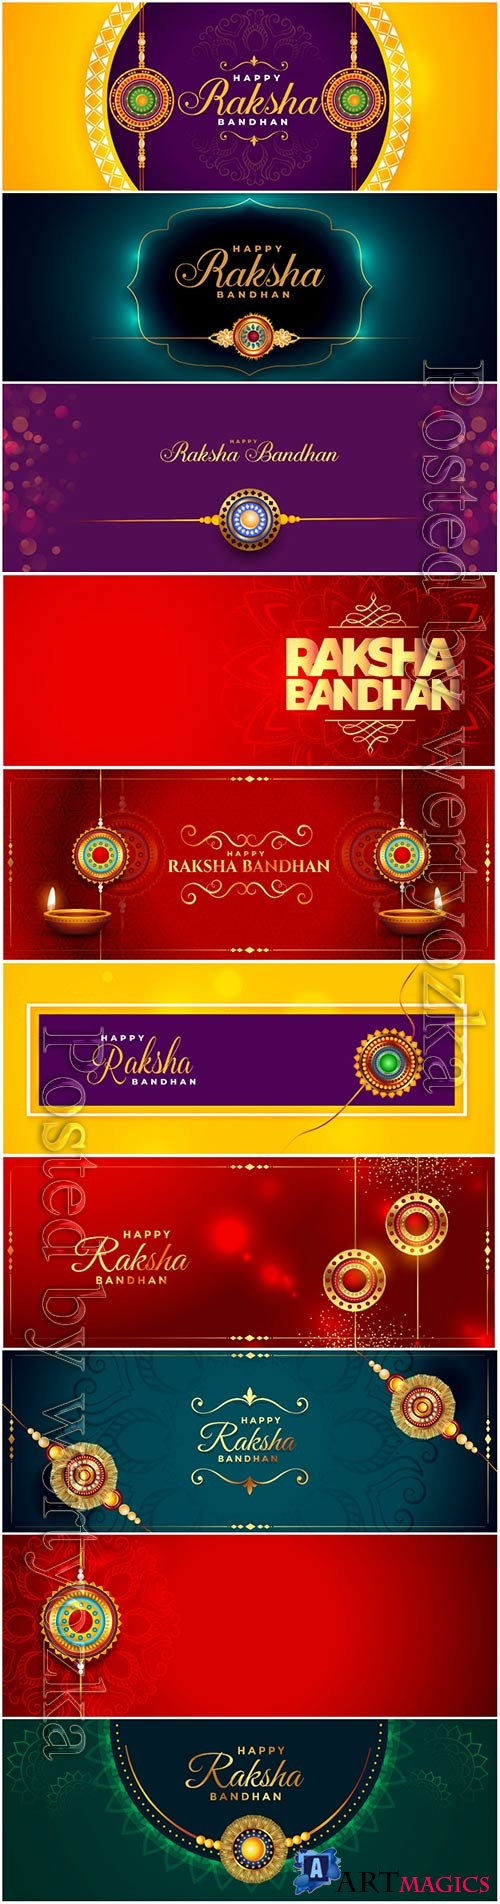 Raksha bandhan beautiful vector banner with golden rakhi